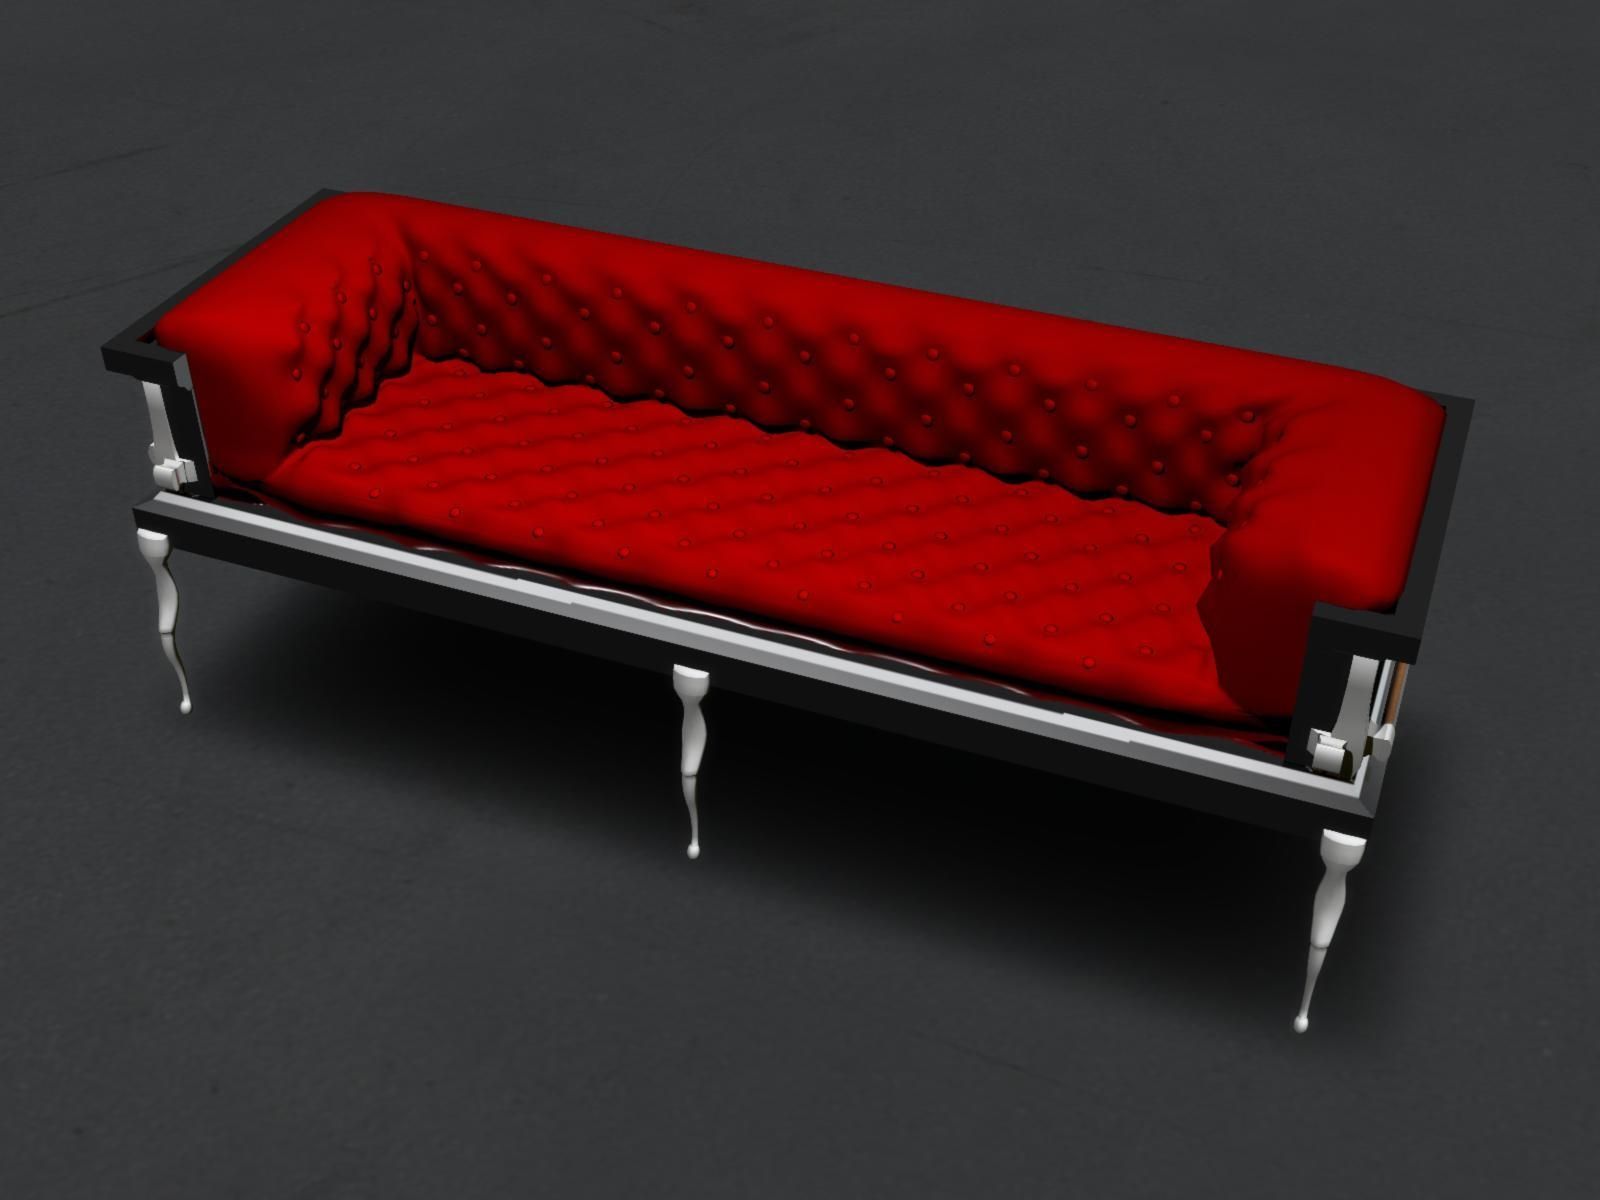 Coffin Sofa With Design Photo 38203 | Kengire Regarding Coffin Sofas (View 9 of 20)